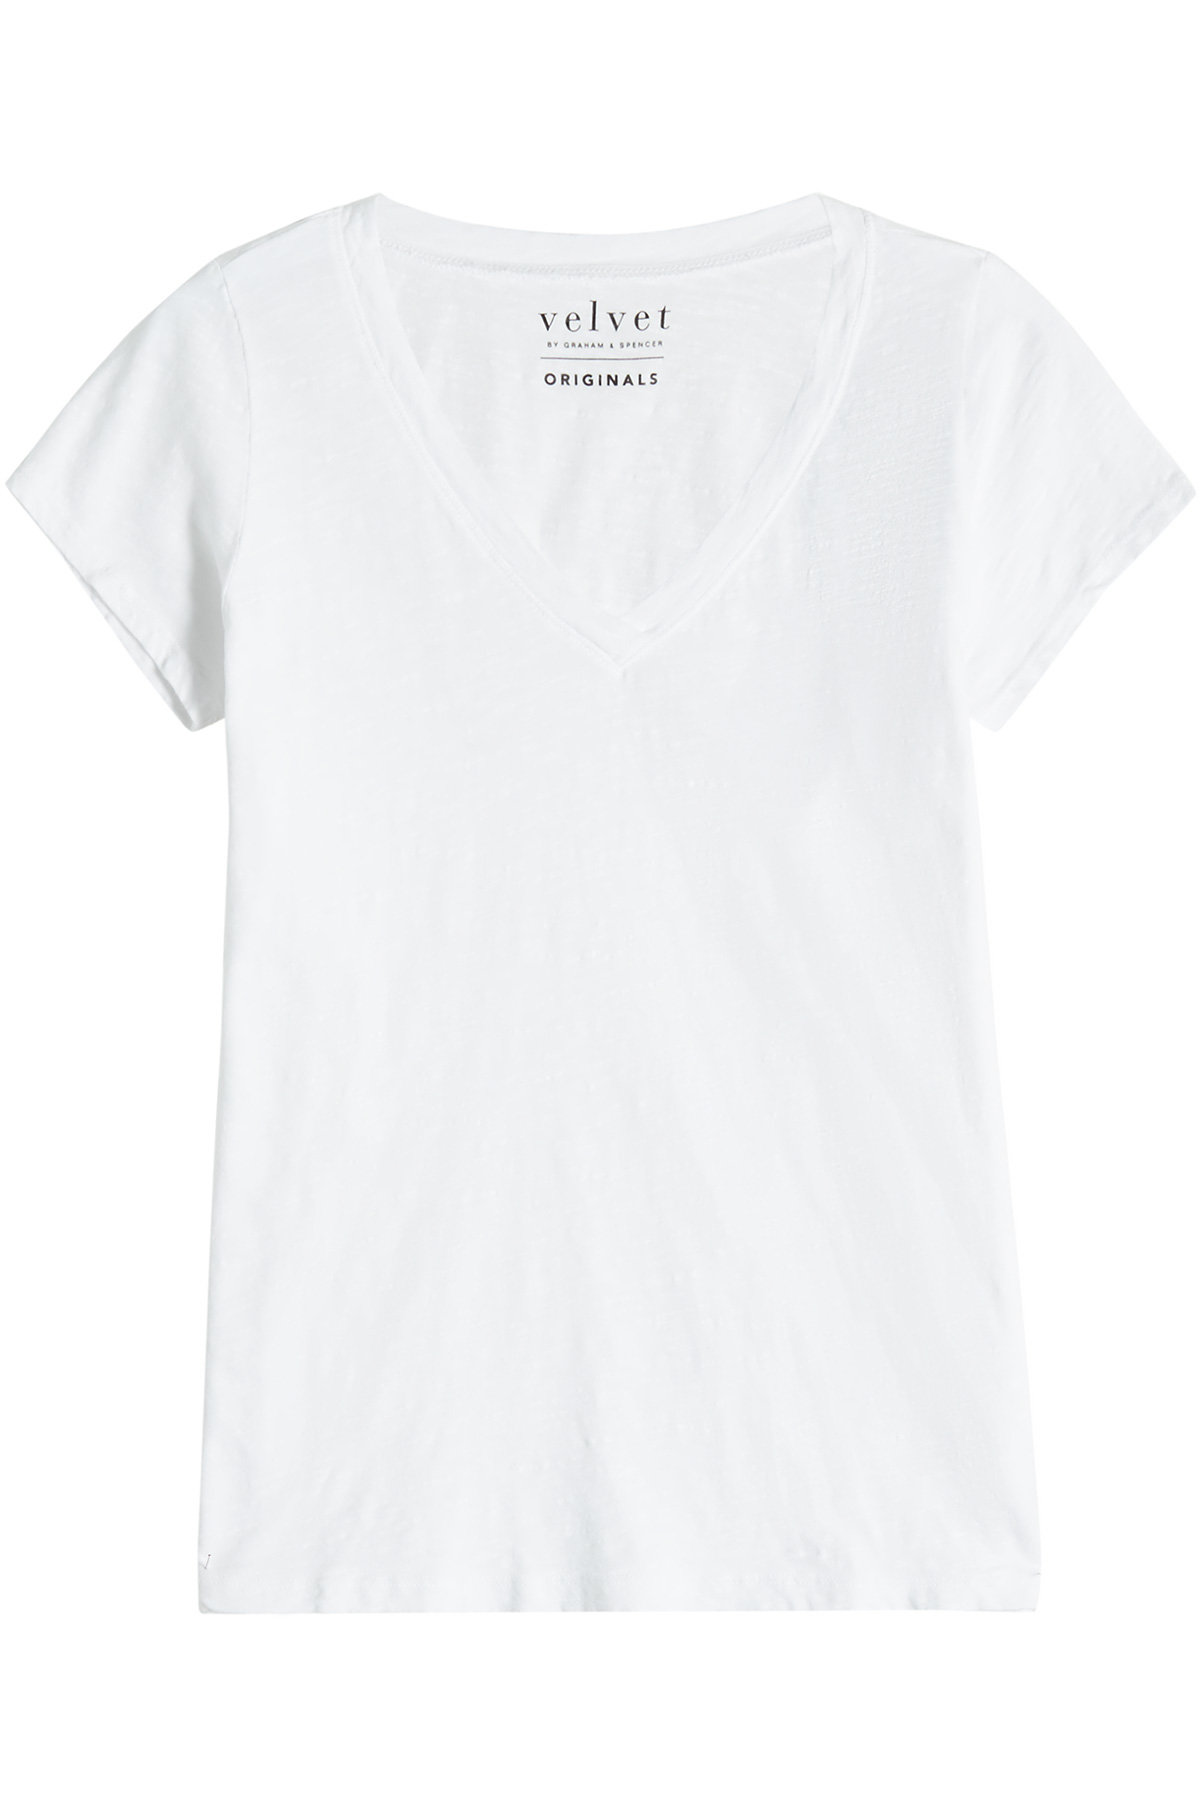 Velvet - Jilian Cotton T-Shirt